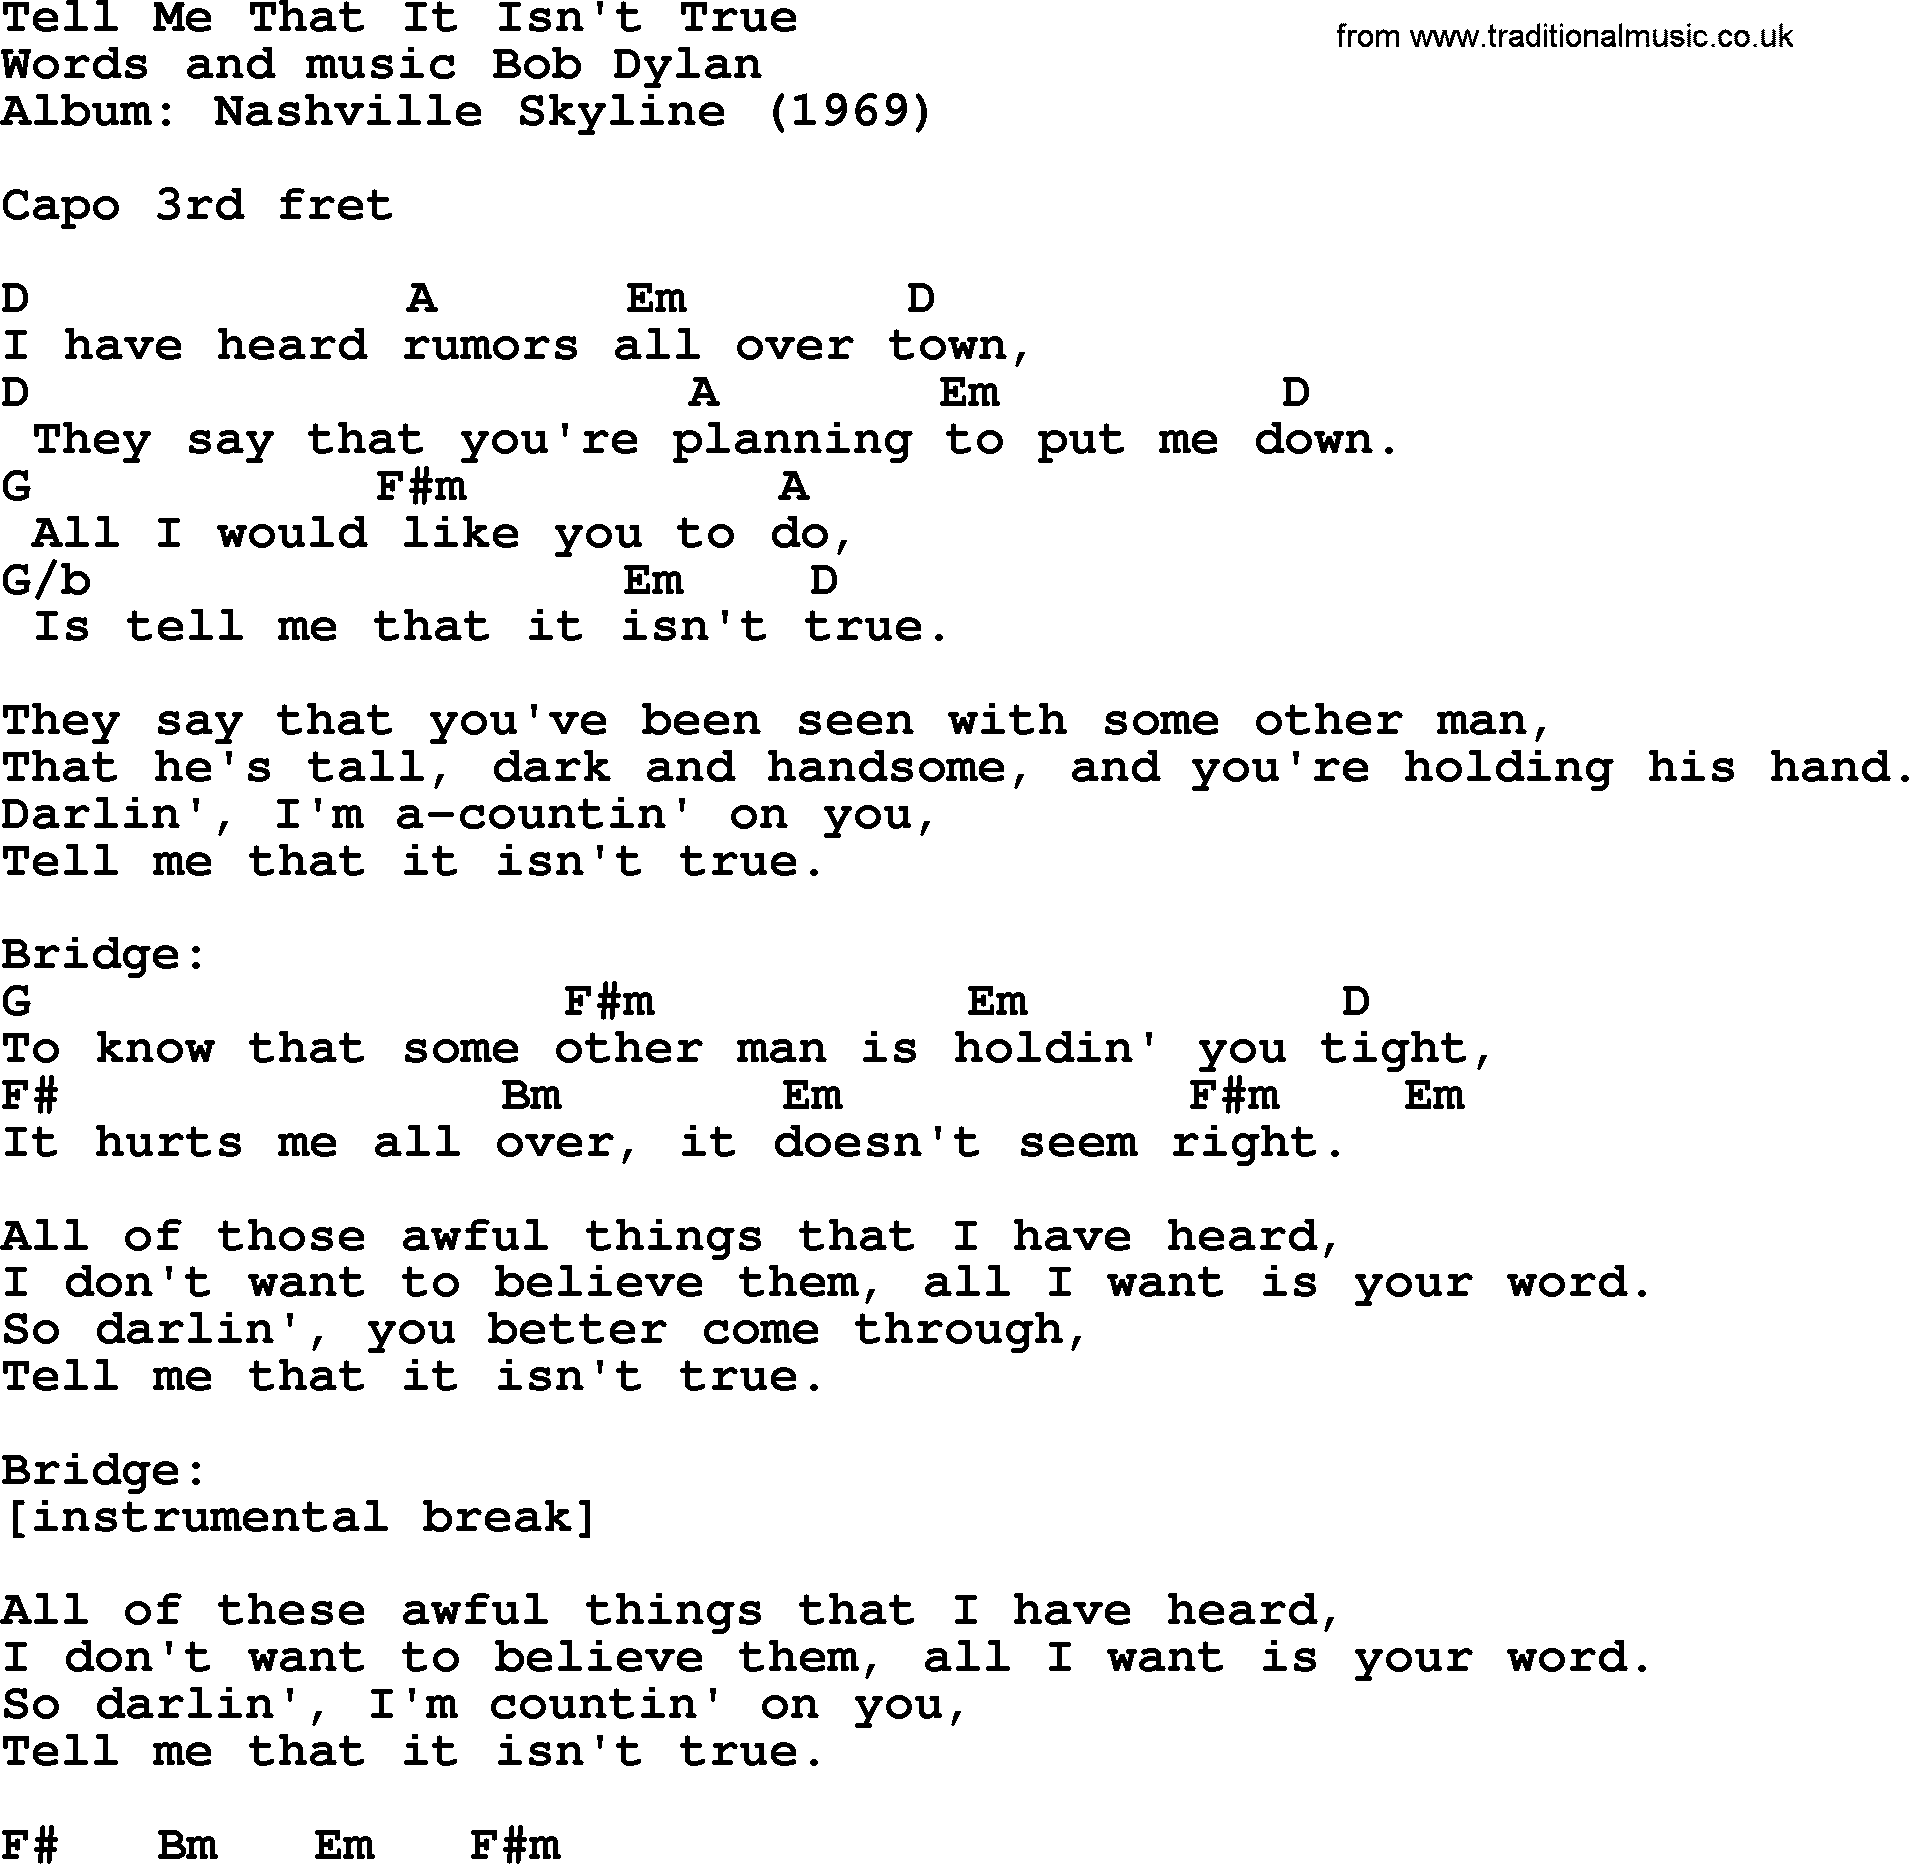 Bob Dylan song, lyrics with chords - Tell Me That It Isn't True